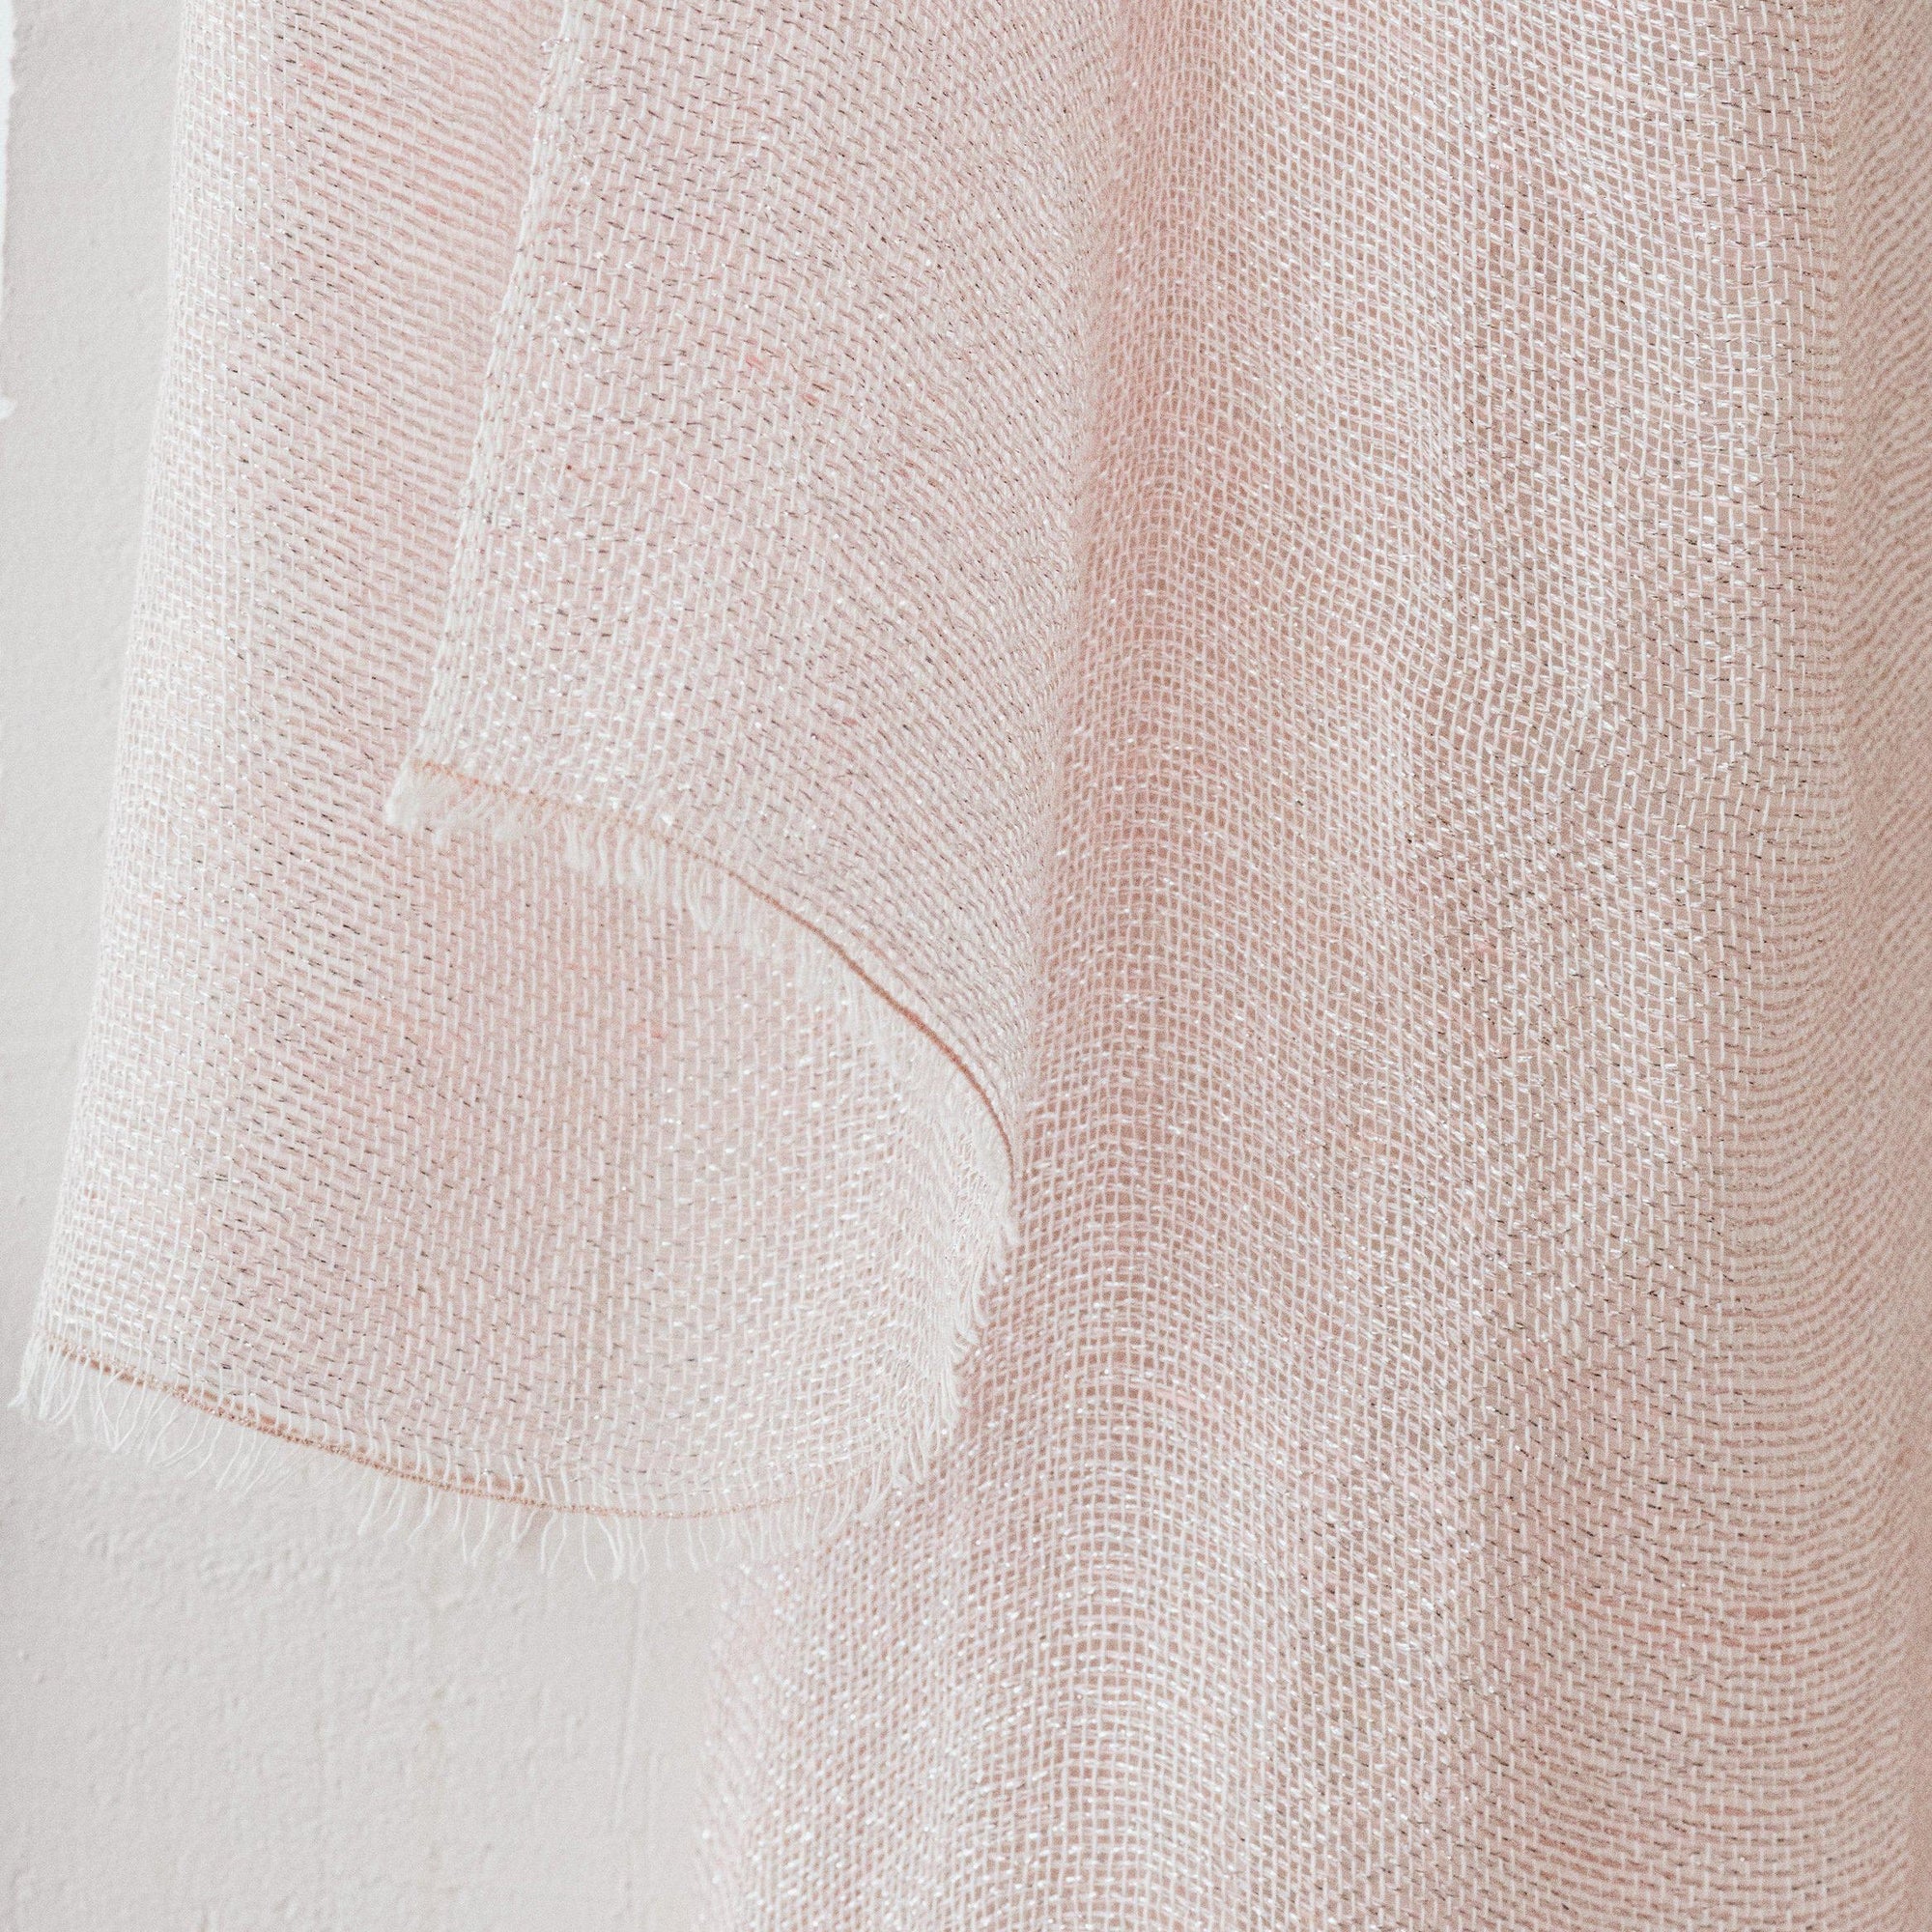 Linen gauze scarf Tinita 36x200cm in light pink with silver shine